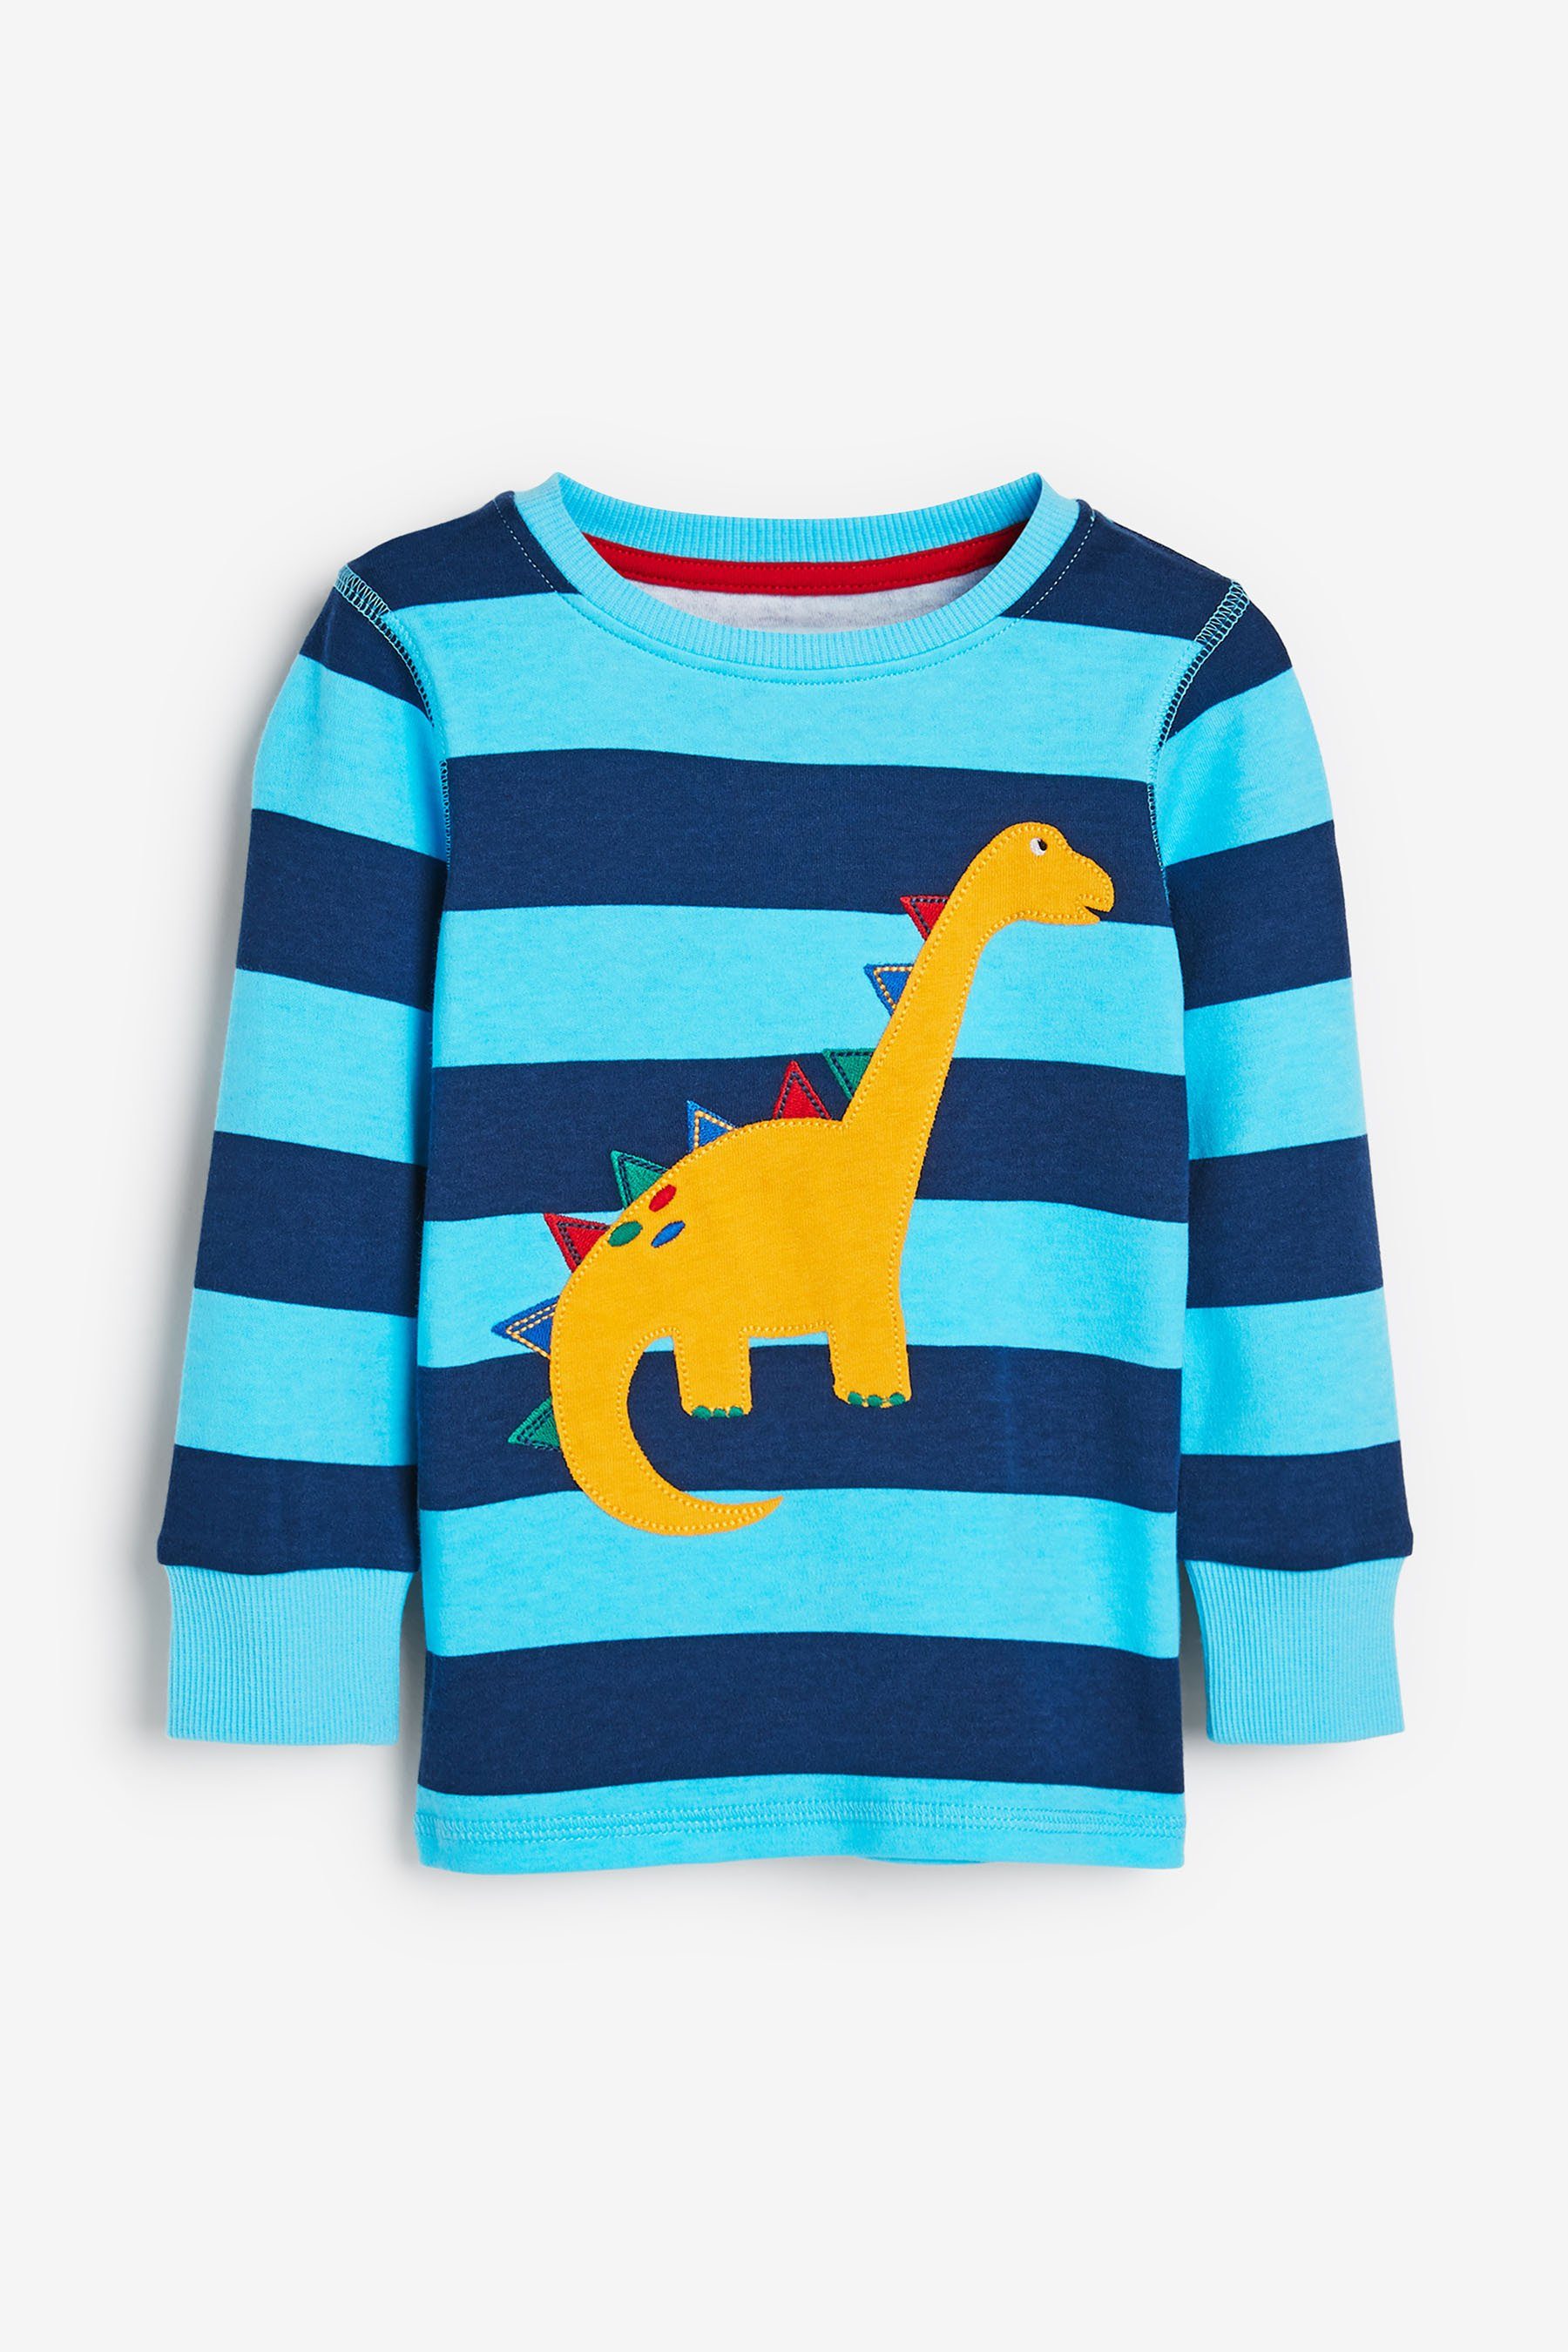 Next Pyjama Dino tlg) Stripe Kuschelpyjamas, 3er-Pack Blue/Red/Green (6